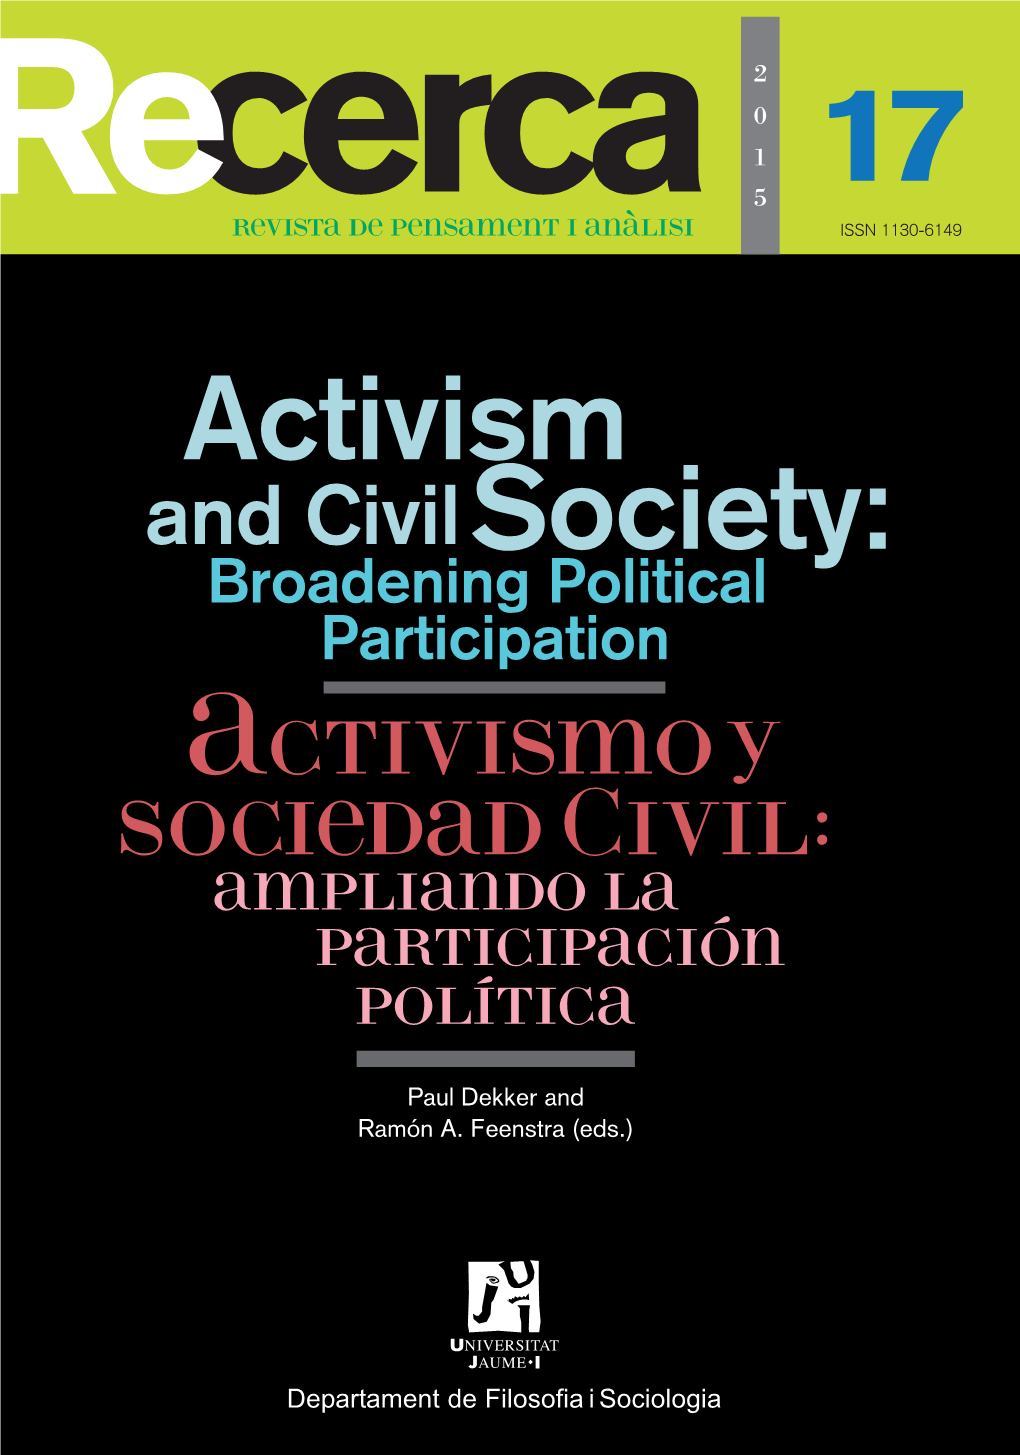 Recerca, 17. Activism and Civil Society